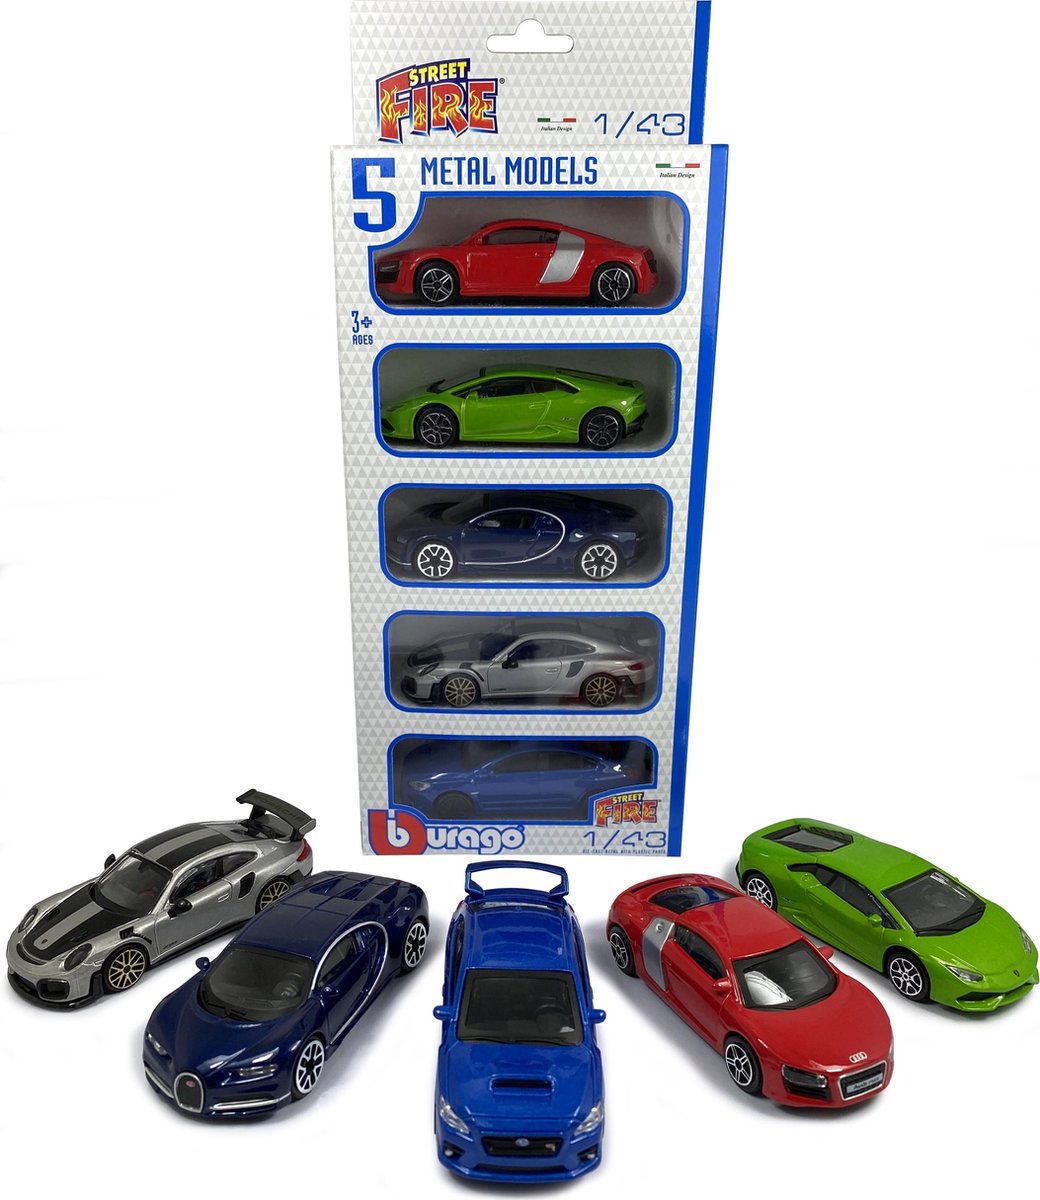 Bburago Porsche 911, Bugatti Chiron, Subaru Wrx Sti, Audi R8, Lamborghini Huracan - set van 5 modelauto's 1:43 - Bburago